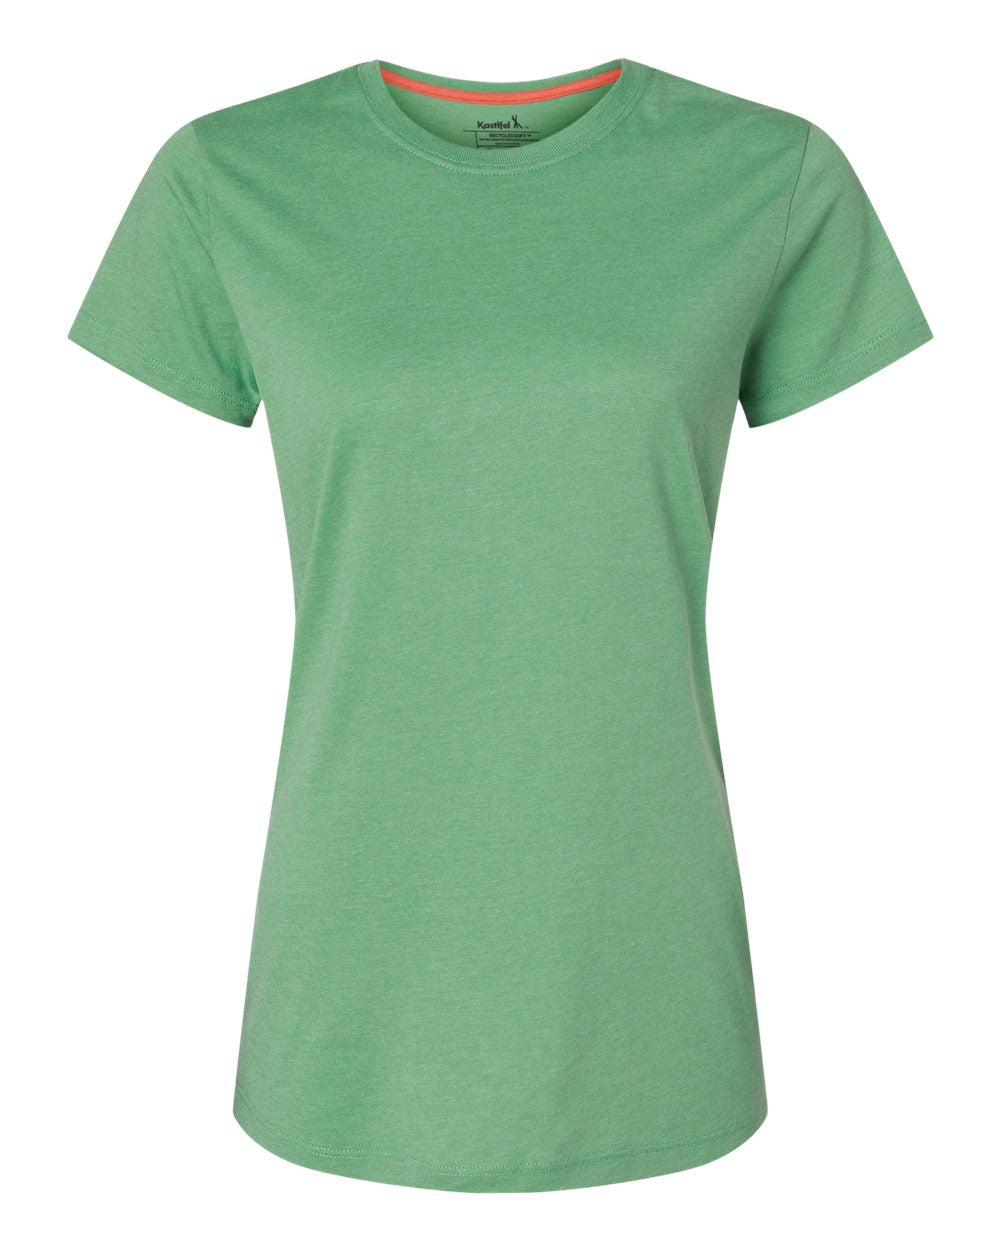 Customizable Kastlfel recycledsoft t-shirt women in Green